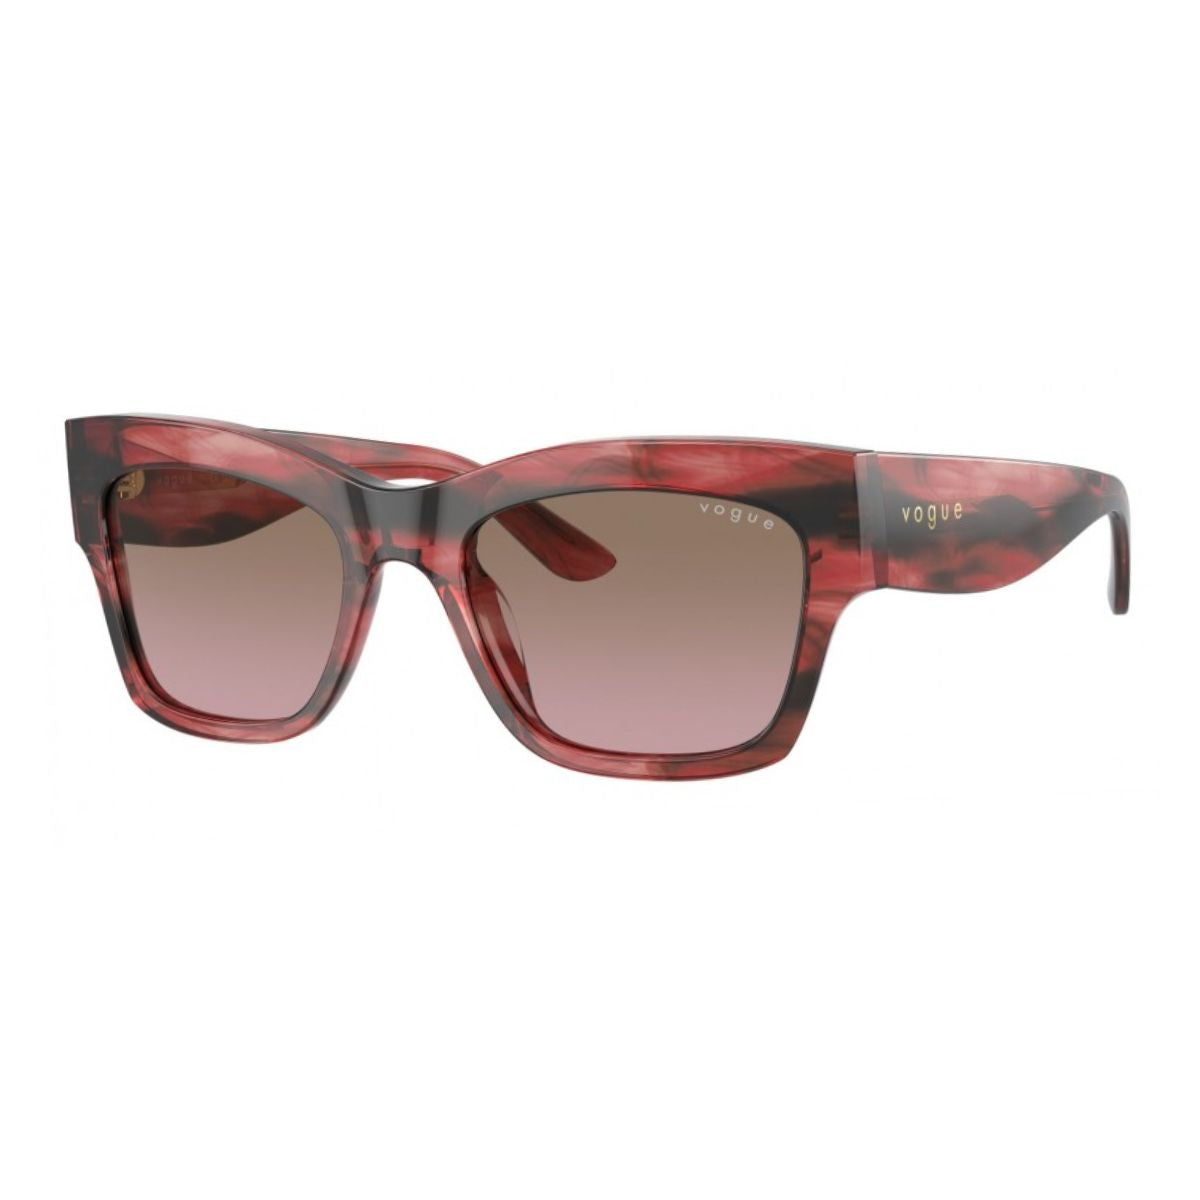 "Shop Stylish Vogue 5524 Rectangle Sunglasses For Women's | Optorium"